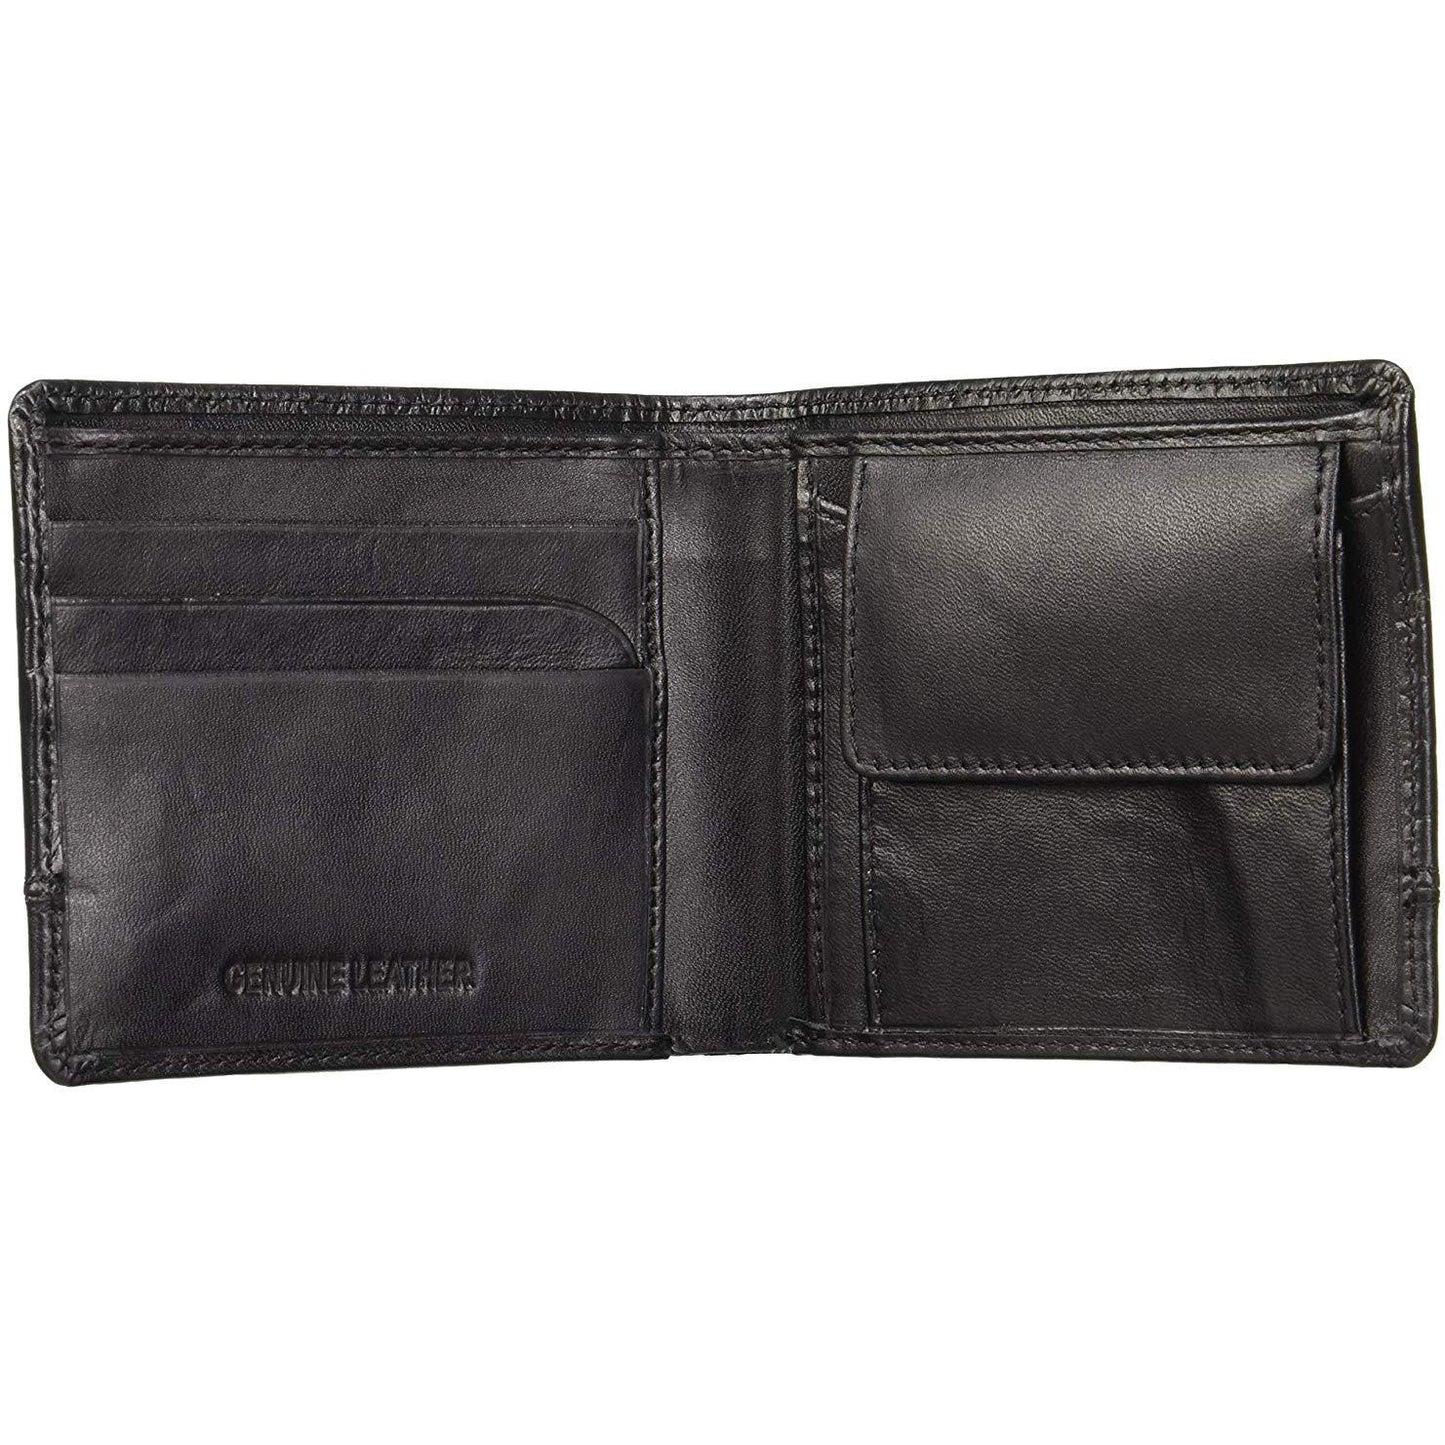 Black Colour Bi-Fold Italian Leather Slim Wallet ( 3 Card Slot + 2 Hidden Compartment +Coin Pocket + Cash Compartment )